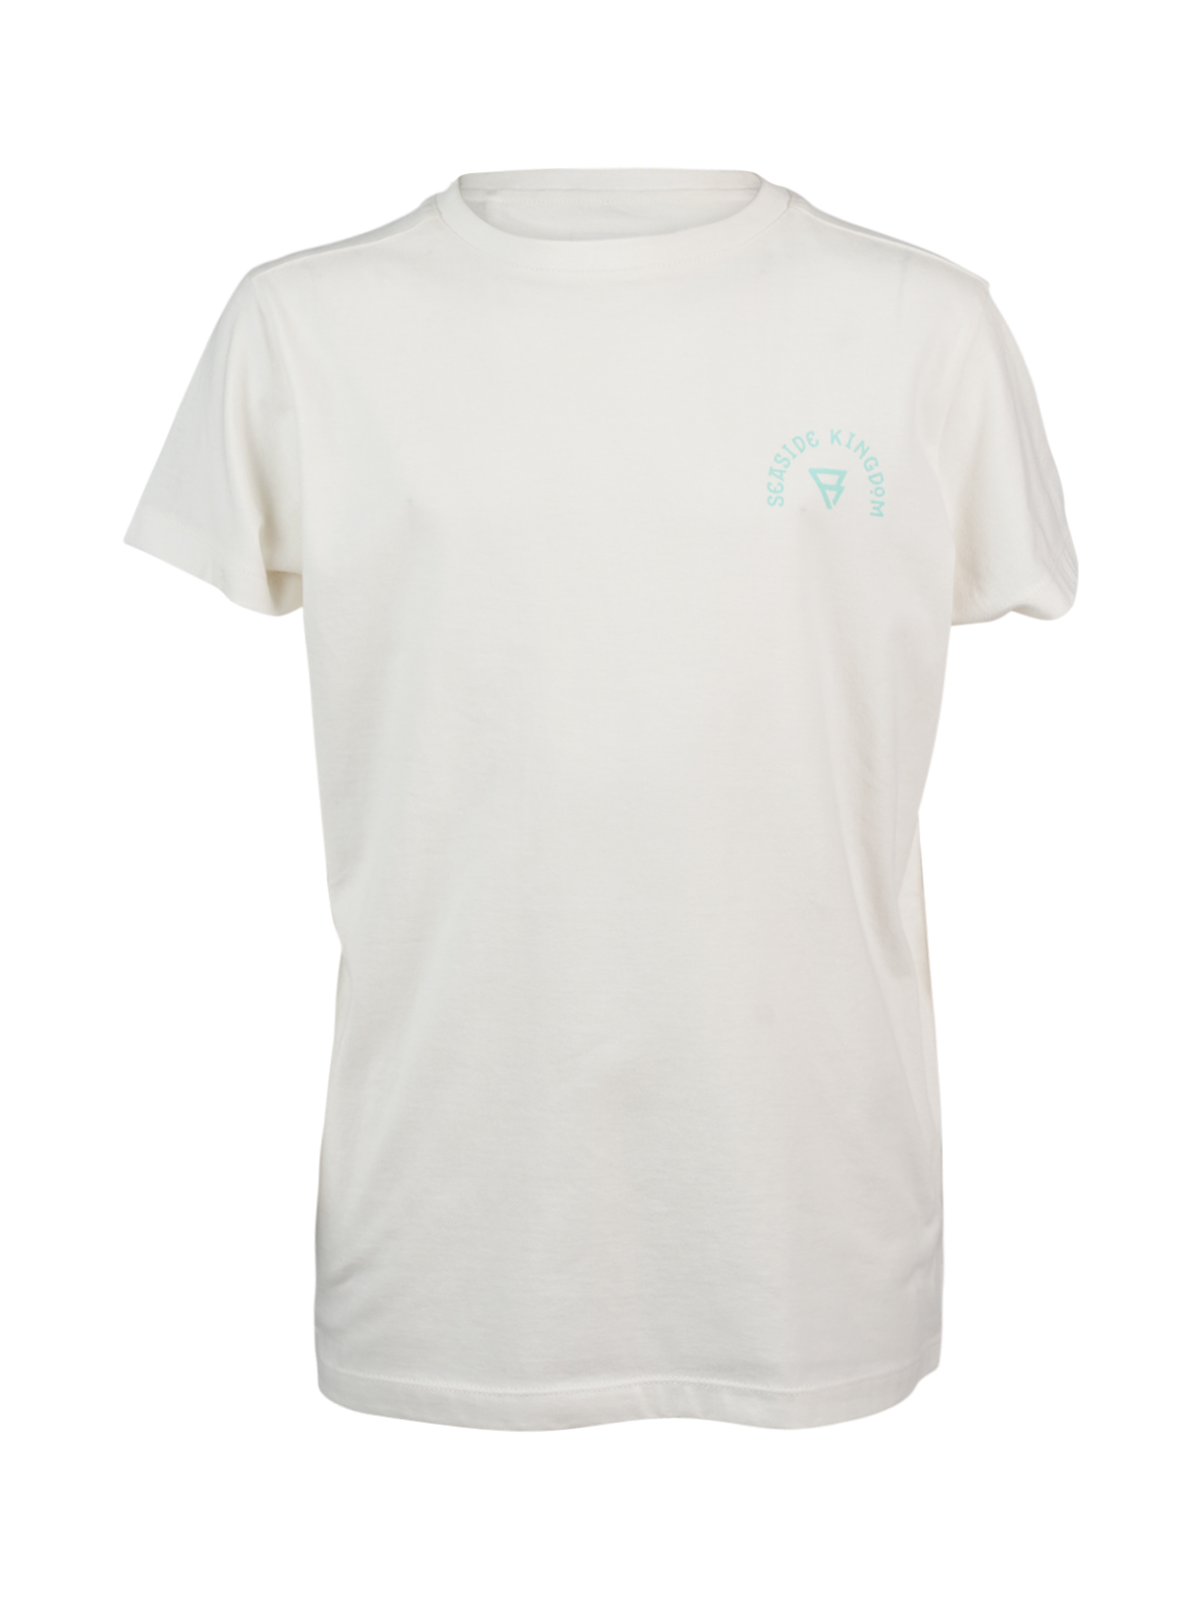 Kingfiny Boys T-shirt | Off-White